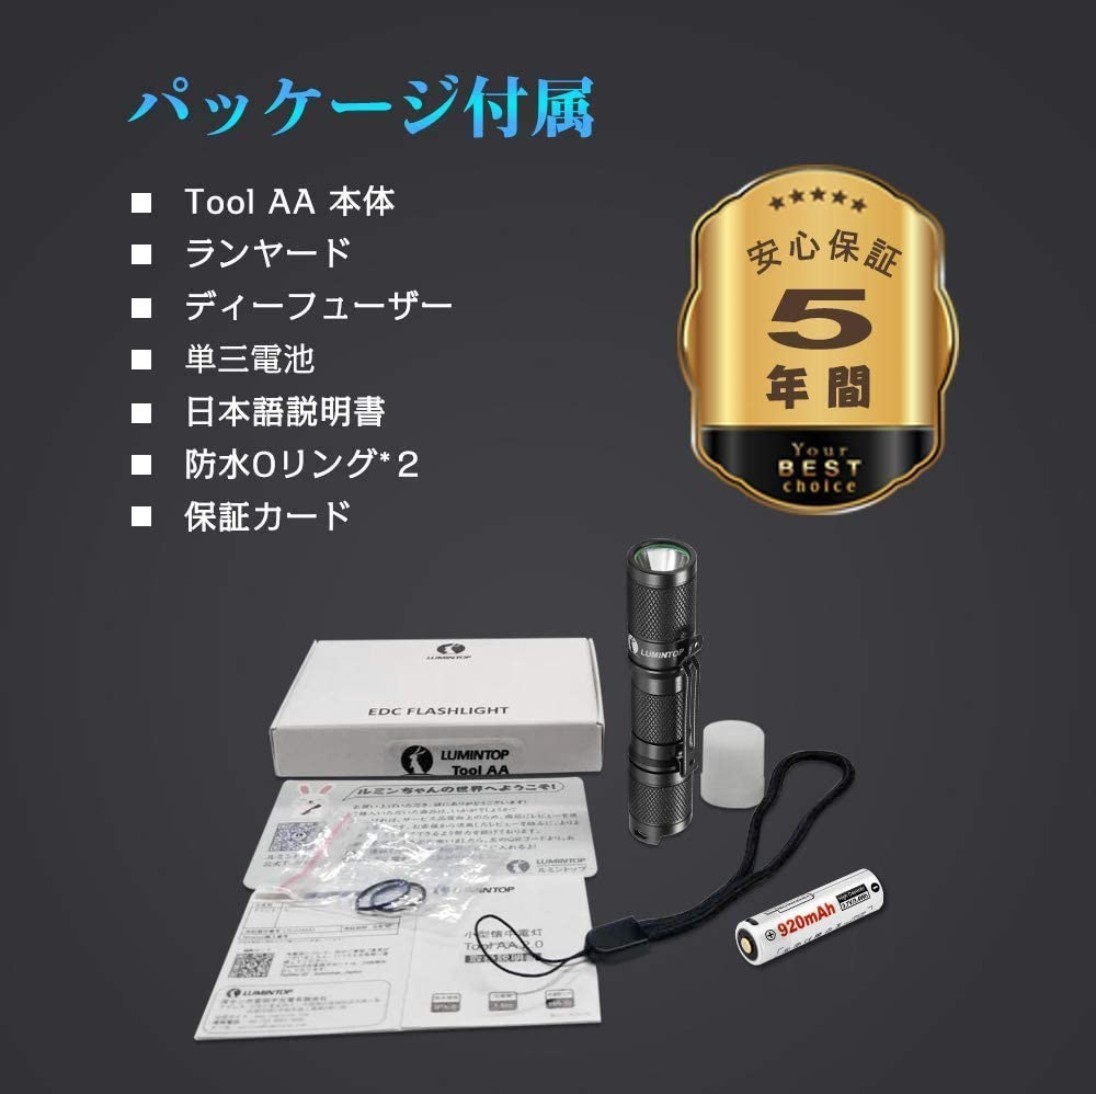 【069】LUMINTOP Tool AA 2.0 懐中電灯 電池別売り